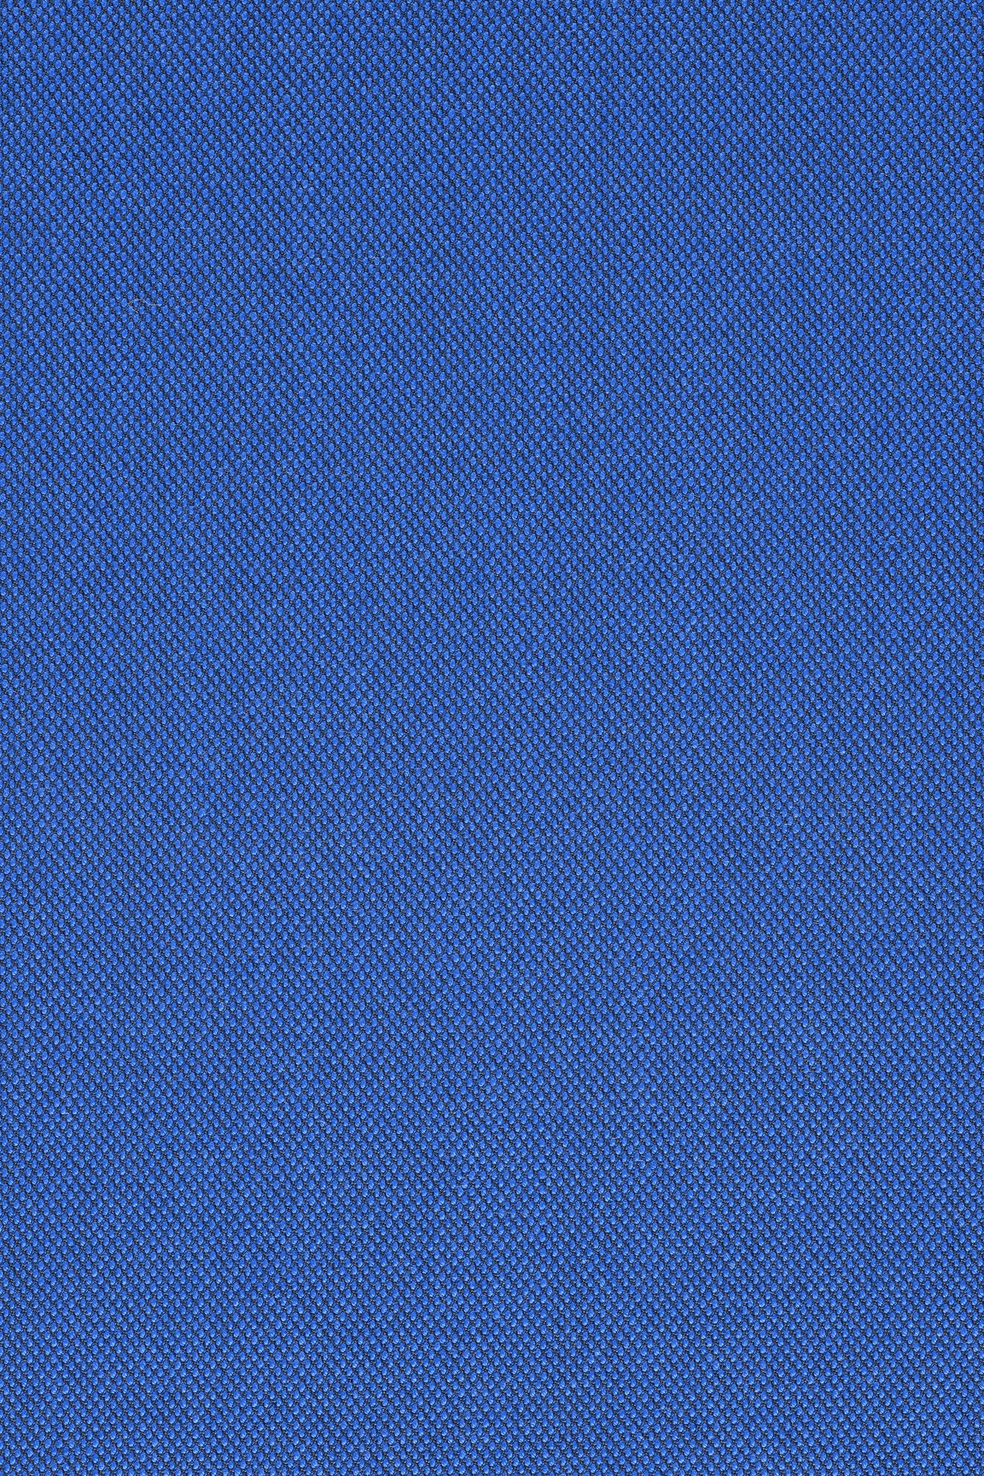 Fabric sample Steelcut Trio 3 746 blue